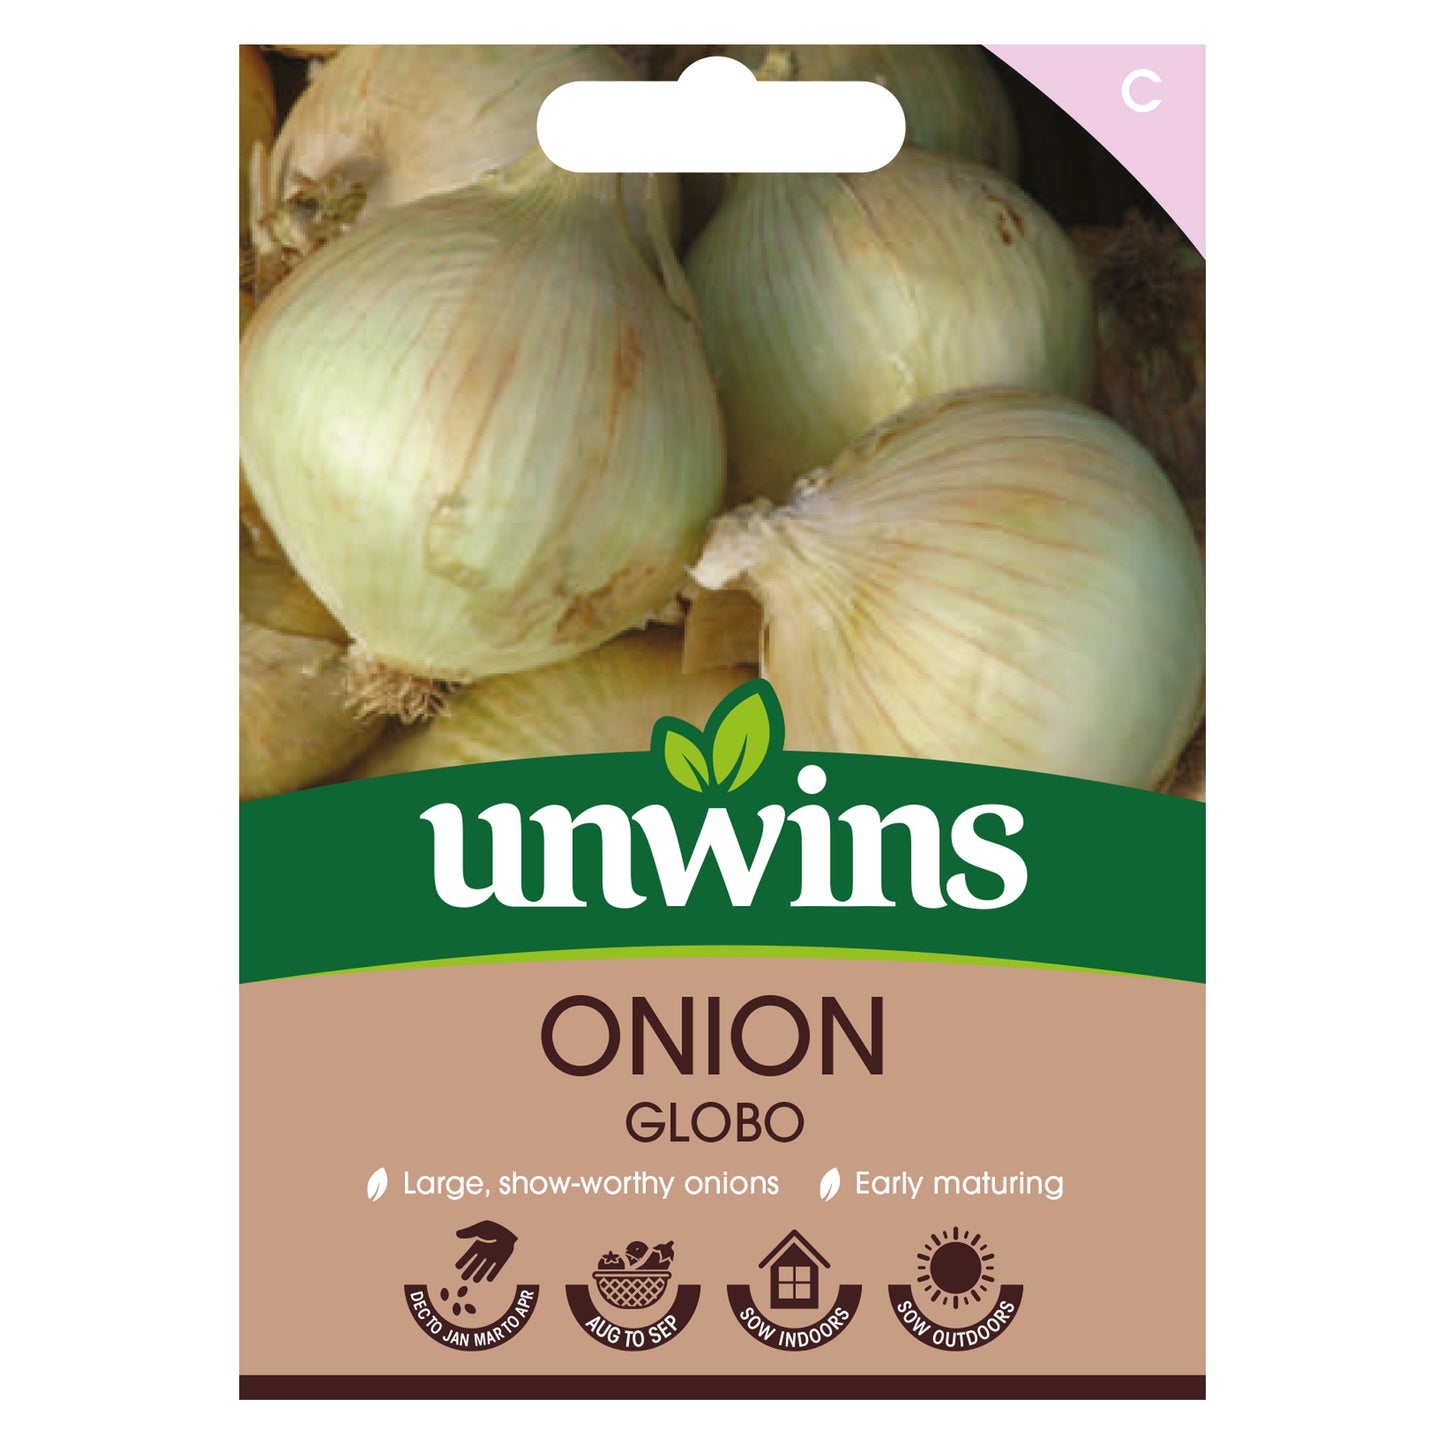 Unwins Onion Globo Seeds front